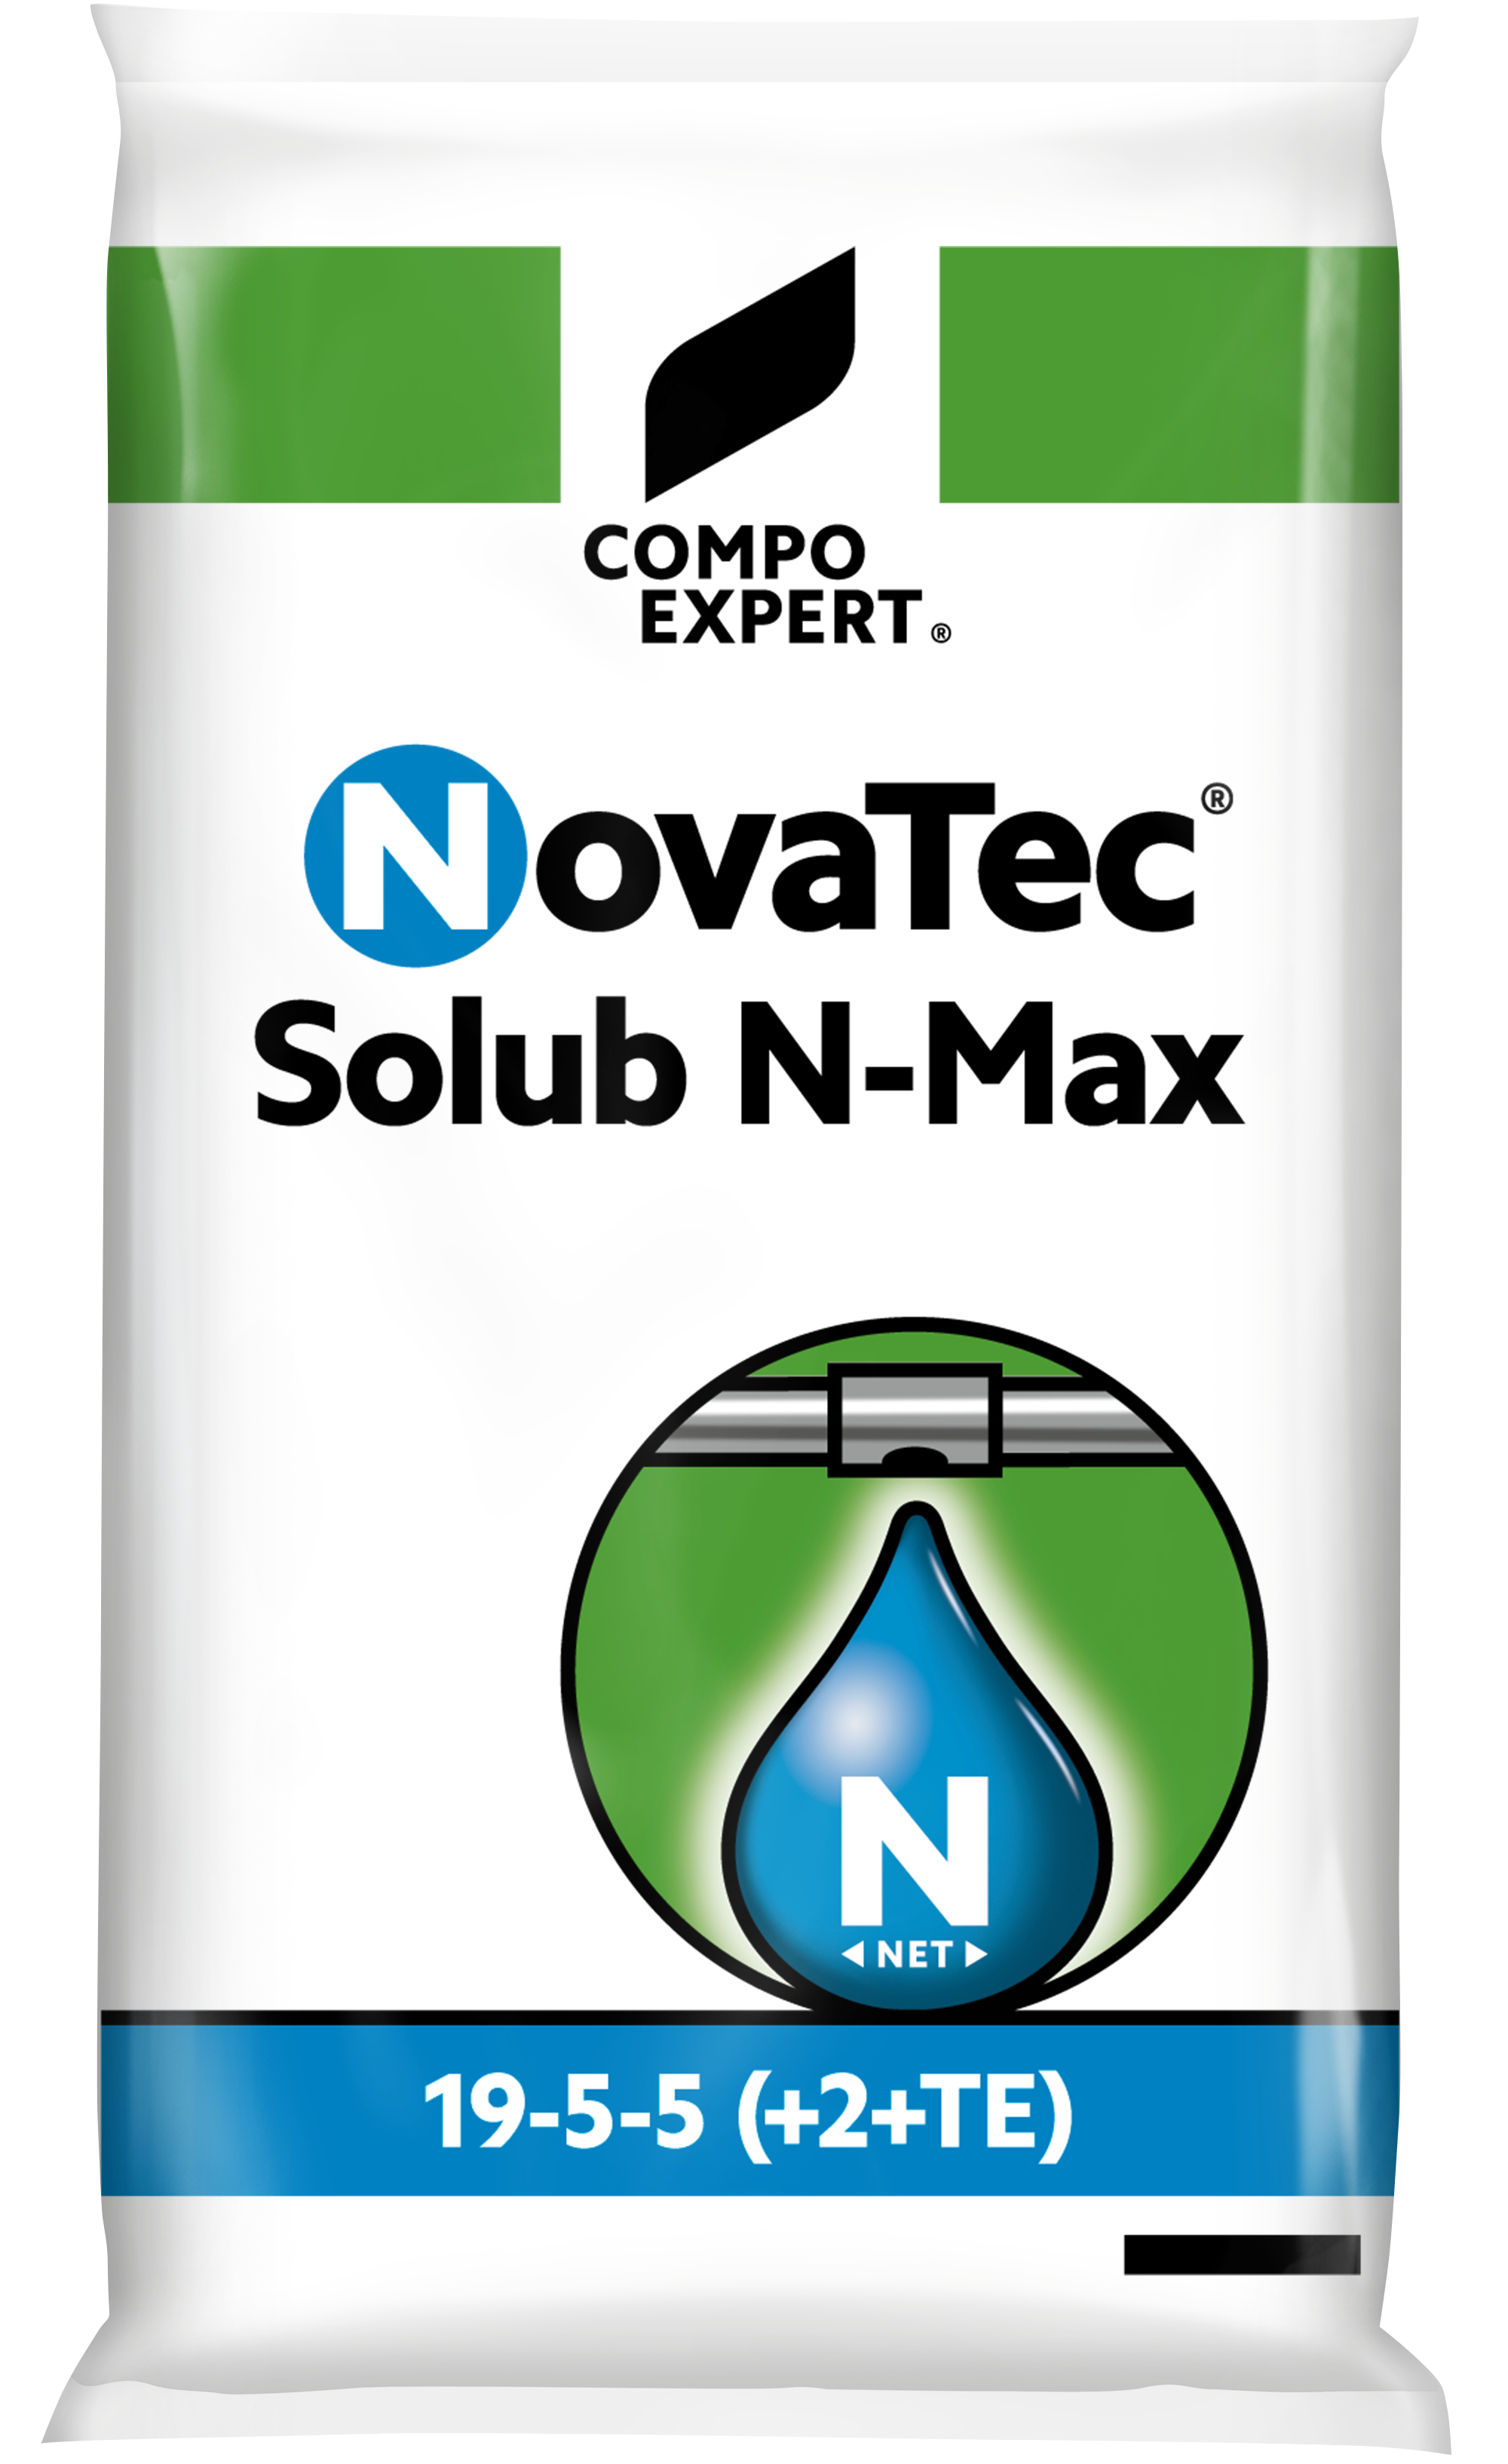 Compo-Expert NovaTec Solub N-Max per KG (soluble fertiliser)